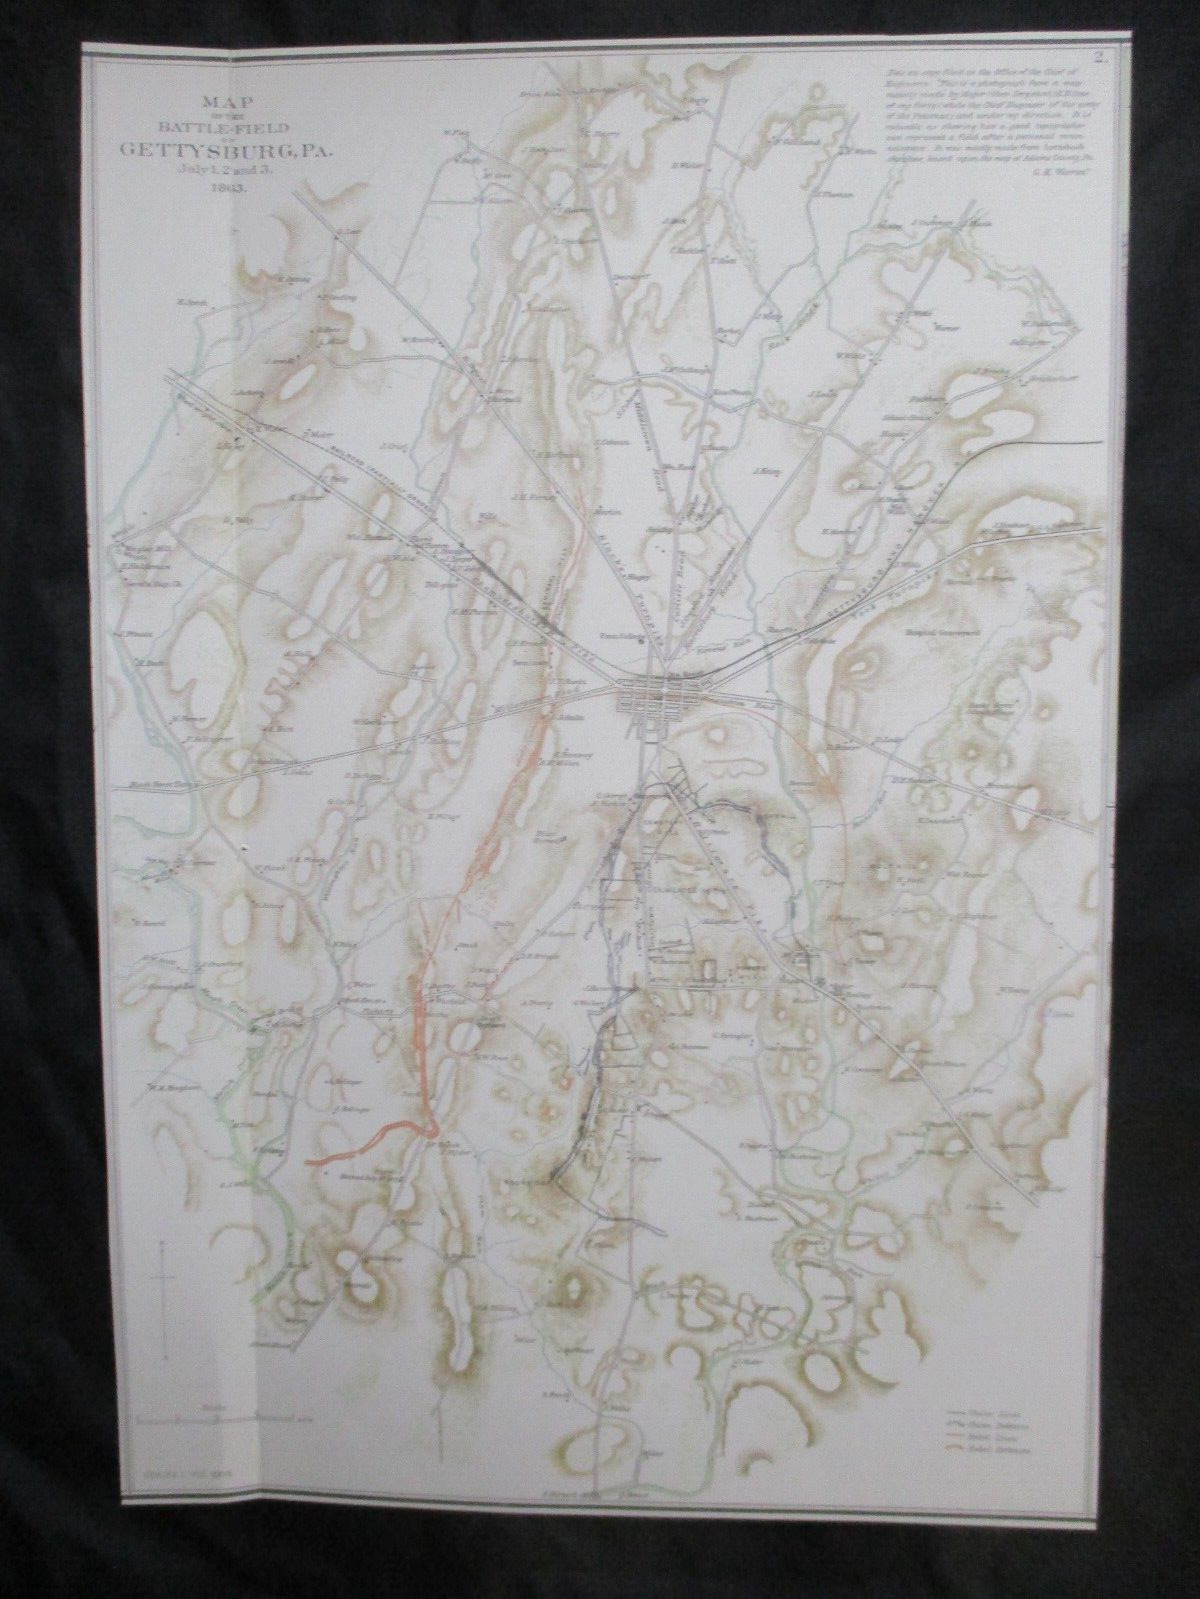 1983 Civil War Map Print - Battlefield of Gettysburg, PA, July 1, 2, & 3, 1863